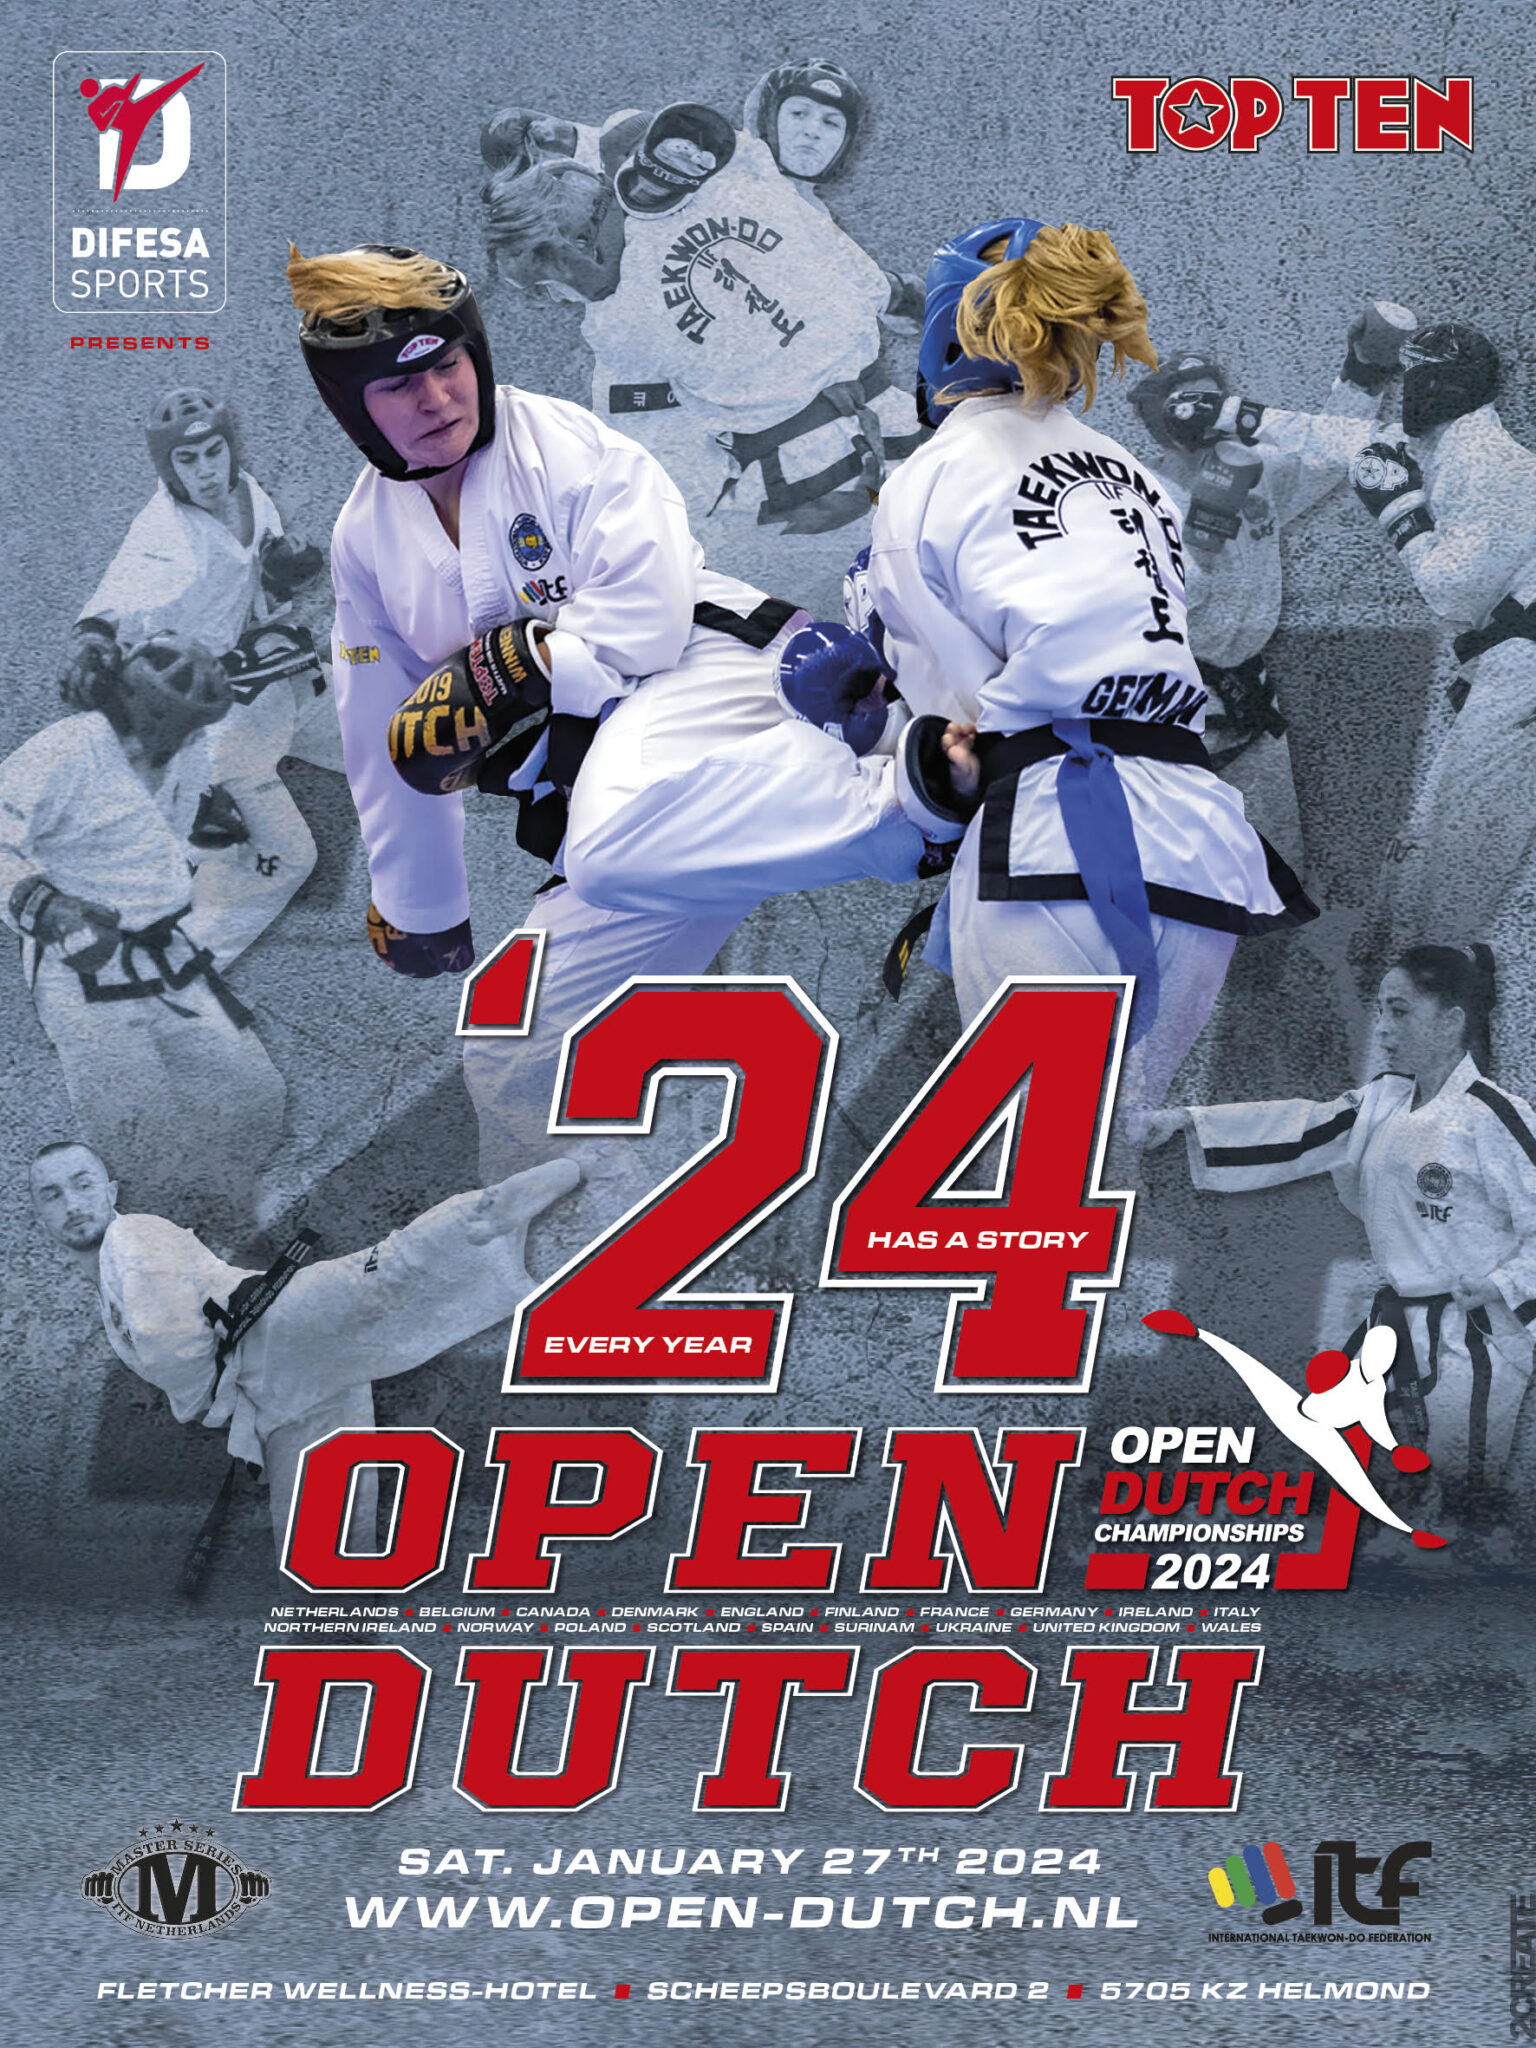 Open Dutch 2024, the preparations have started again! OpenDutch